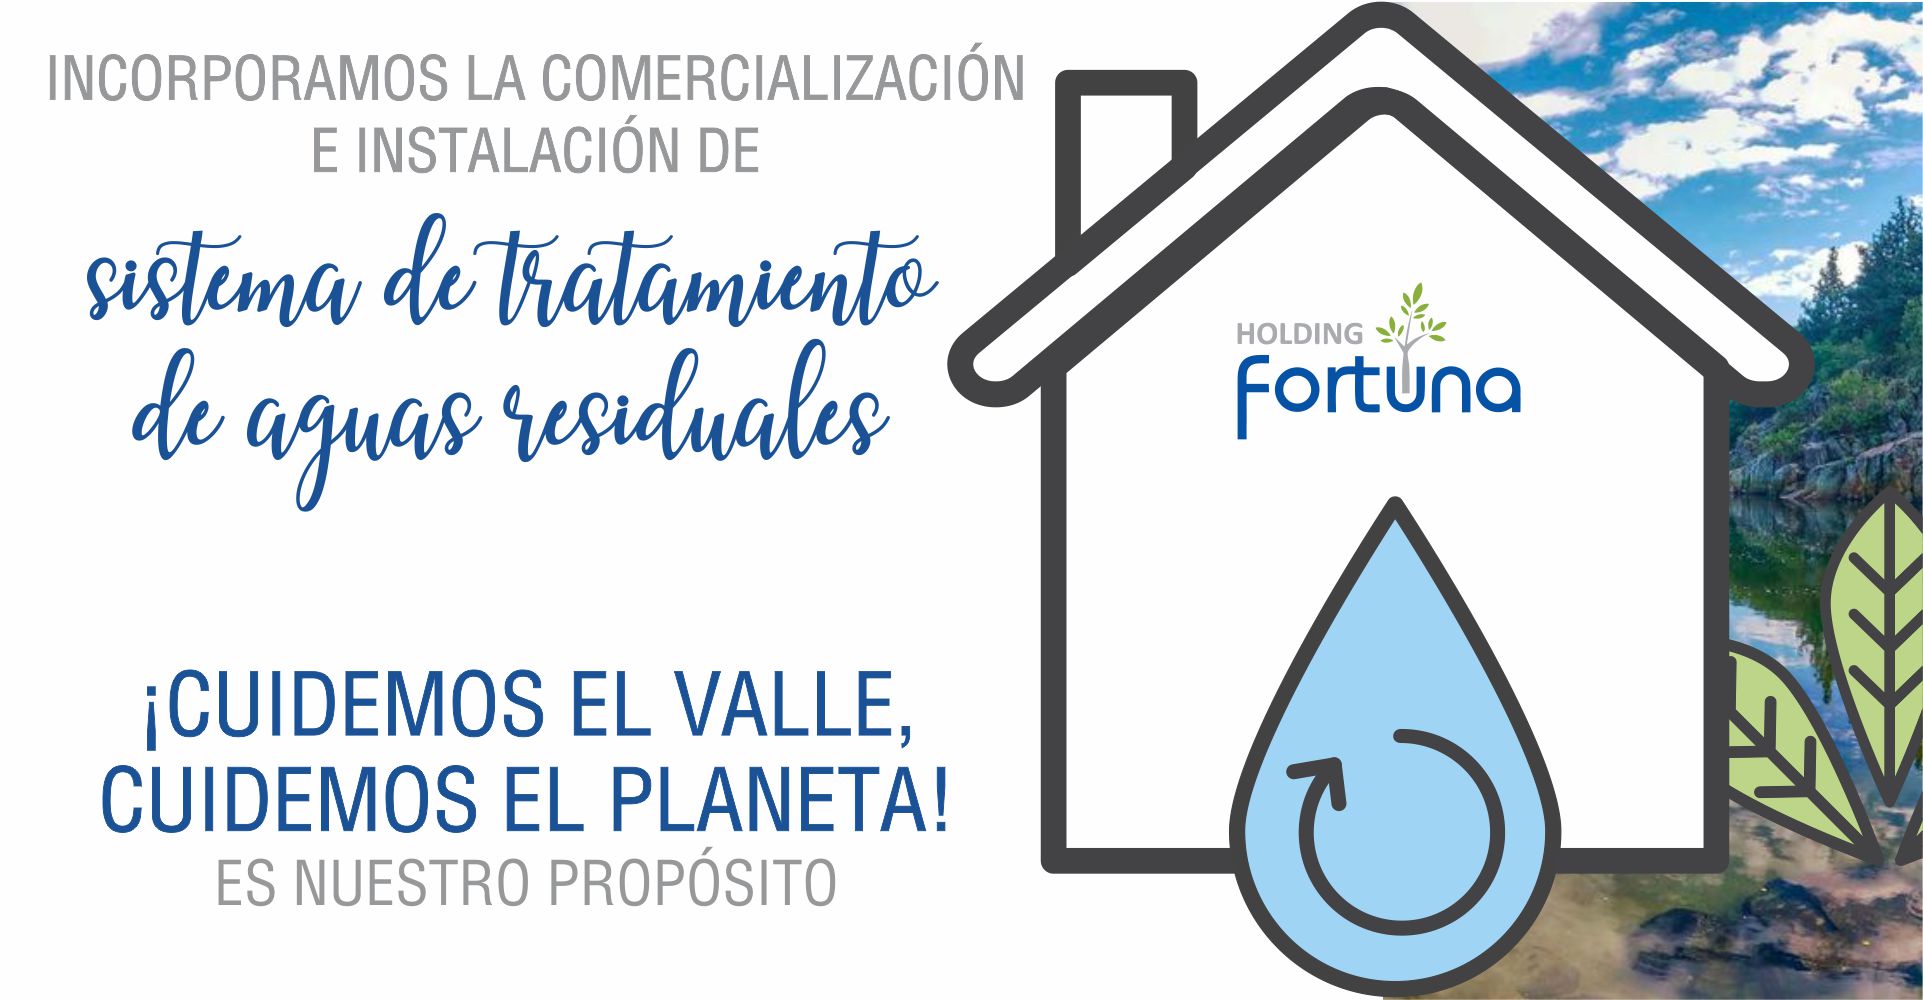 #Biodigestores #FortunaHolding #HoldingFortuna #FortunaInmobiliaria #TratamientoDeAguasResiduales